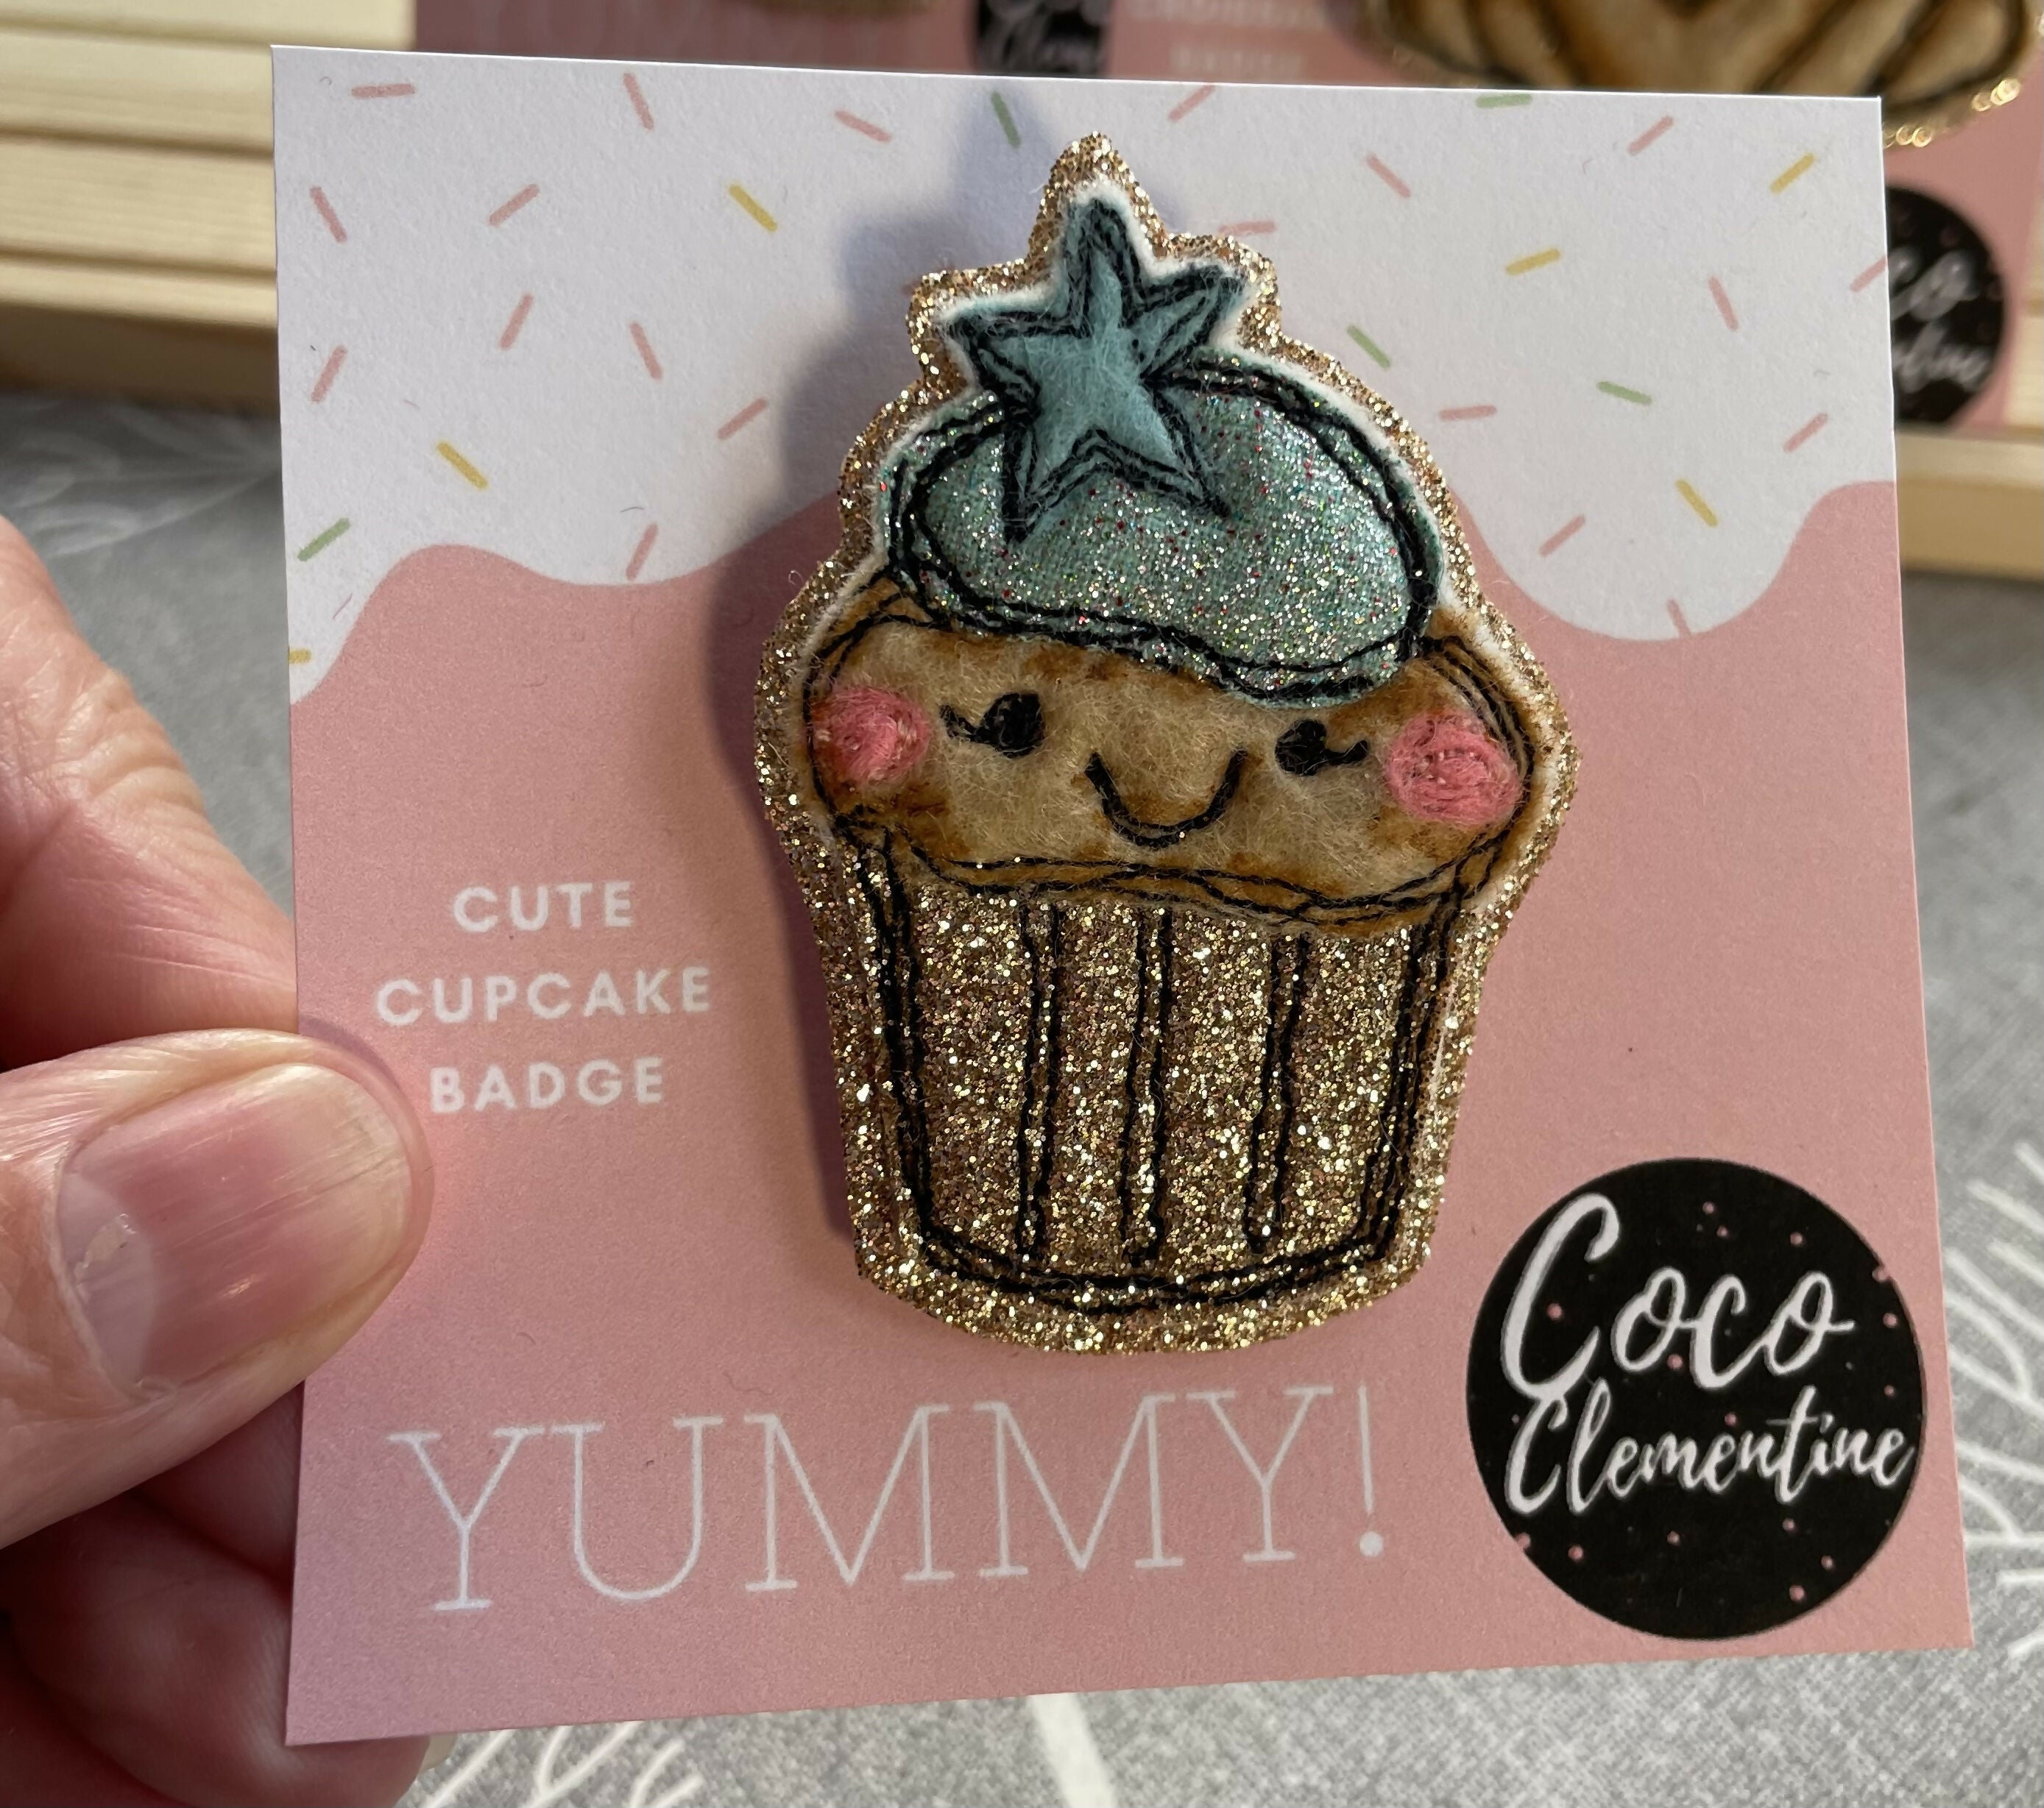 Yummy! Cute Cupcake Badge